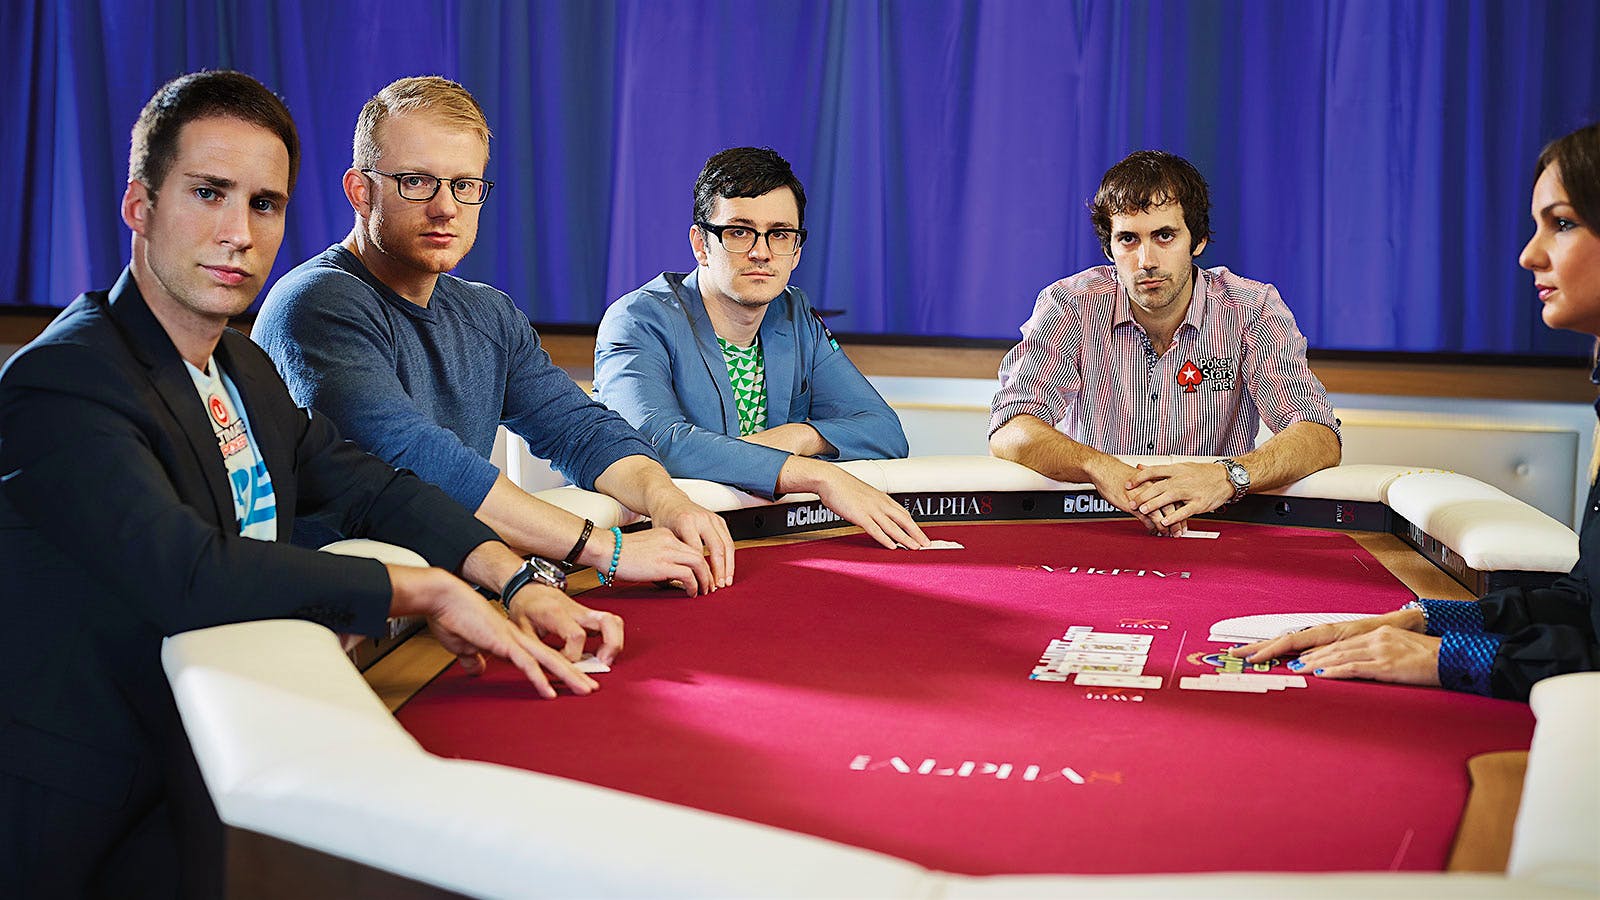 Monte Carlo Las Vegas Poker Room: Unlock the Power of Gaming